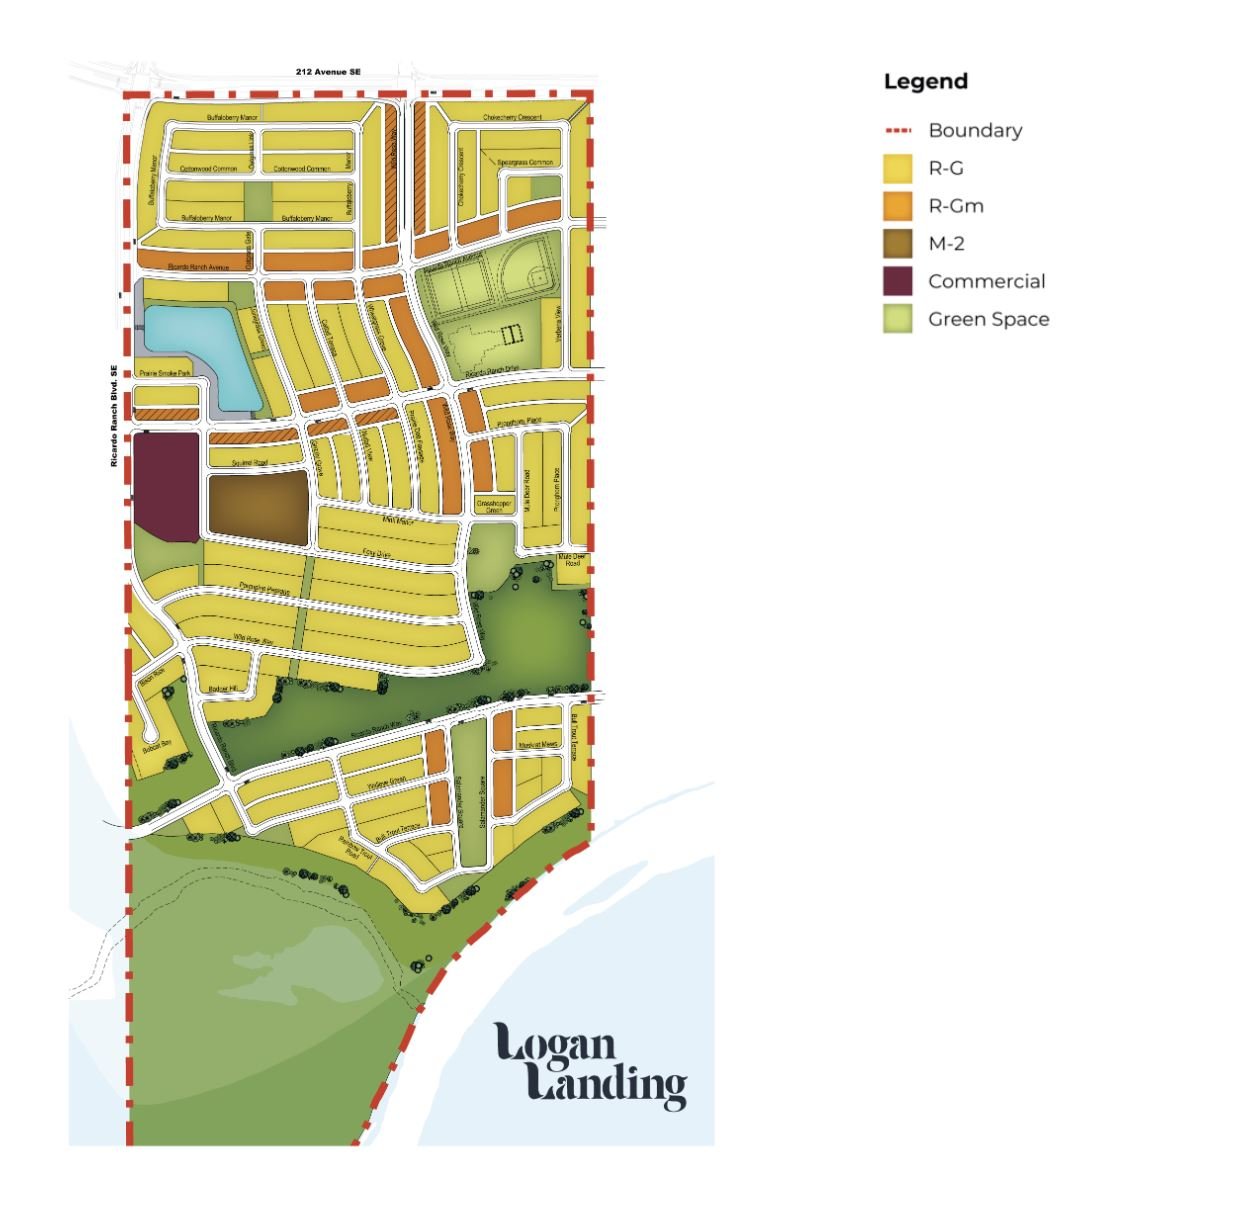 Logan Landing Map, new community in South East Calgary by Genesis